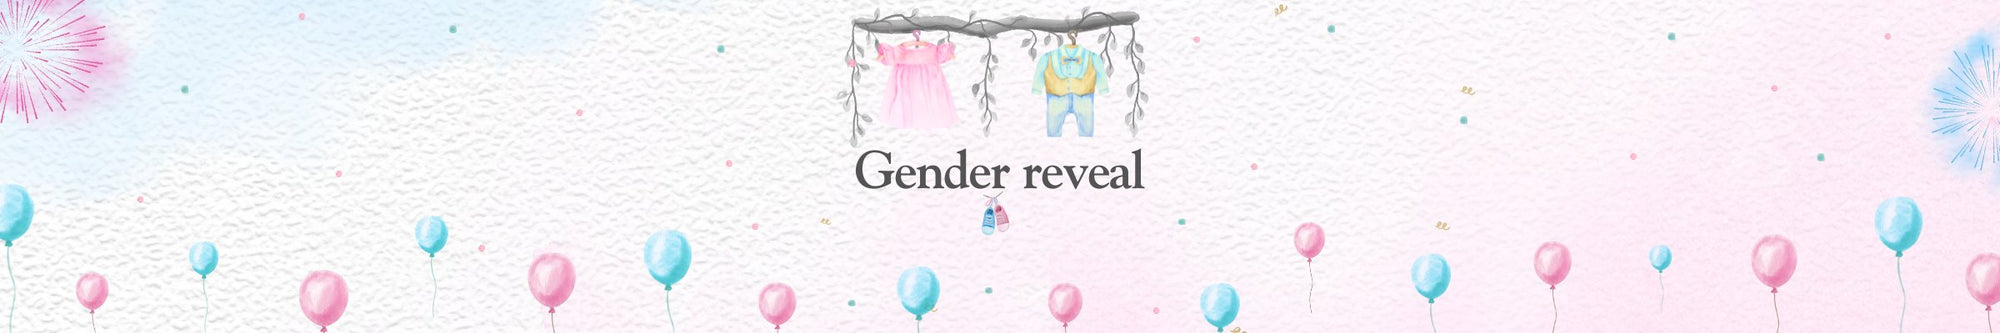 Gender reveal invitation templates